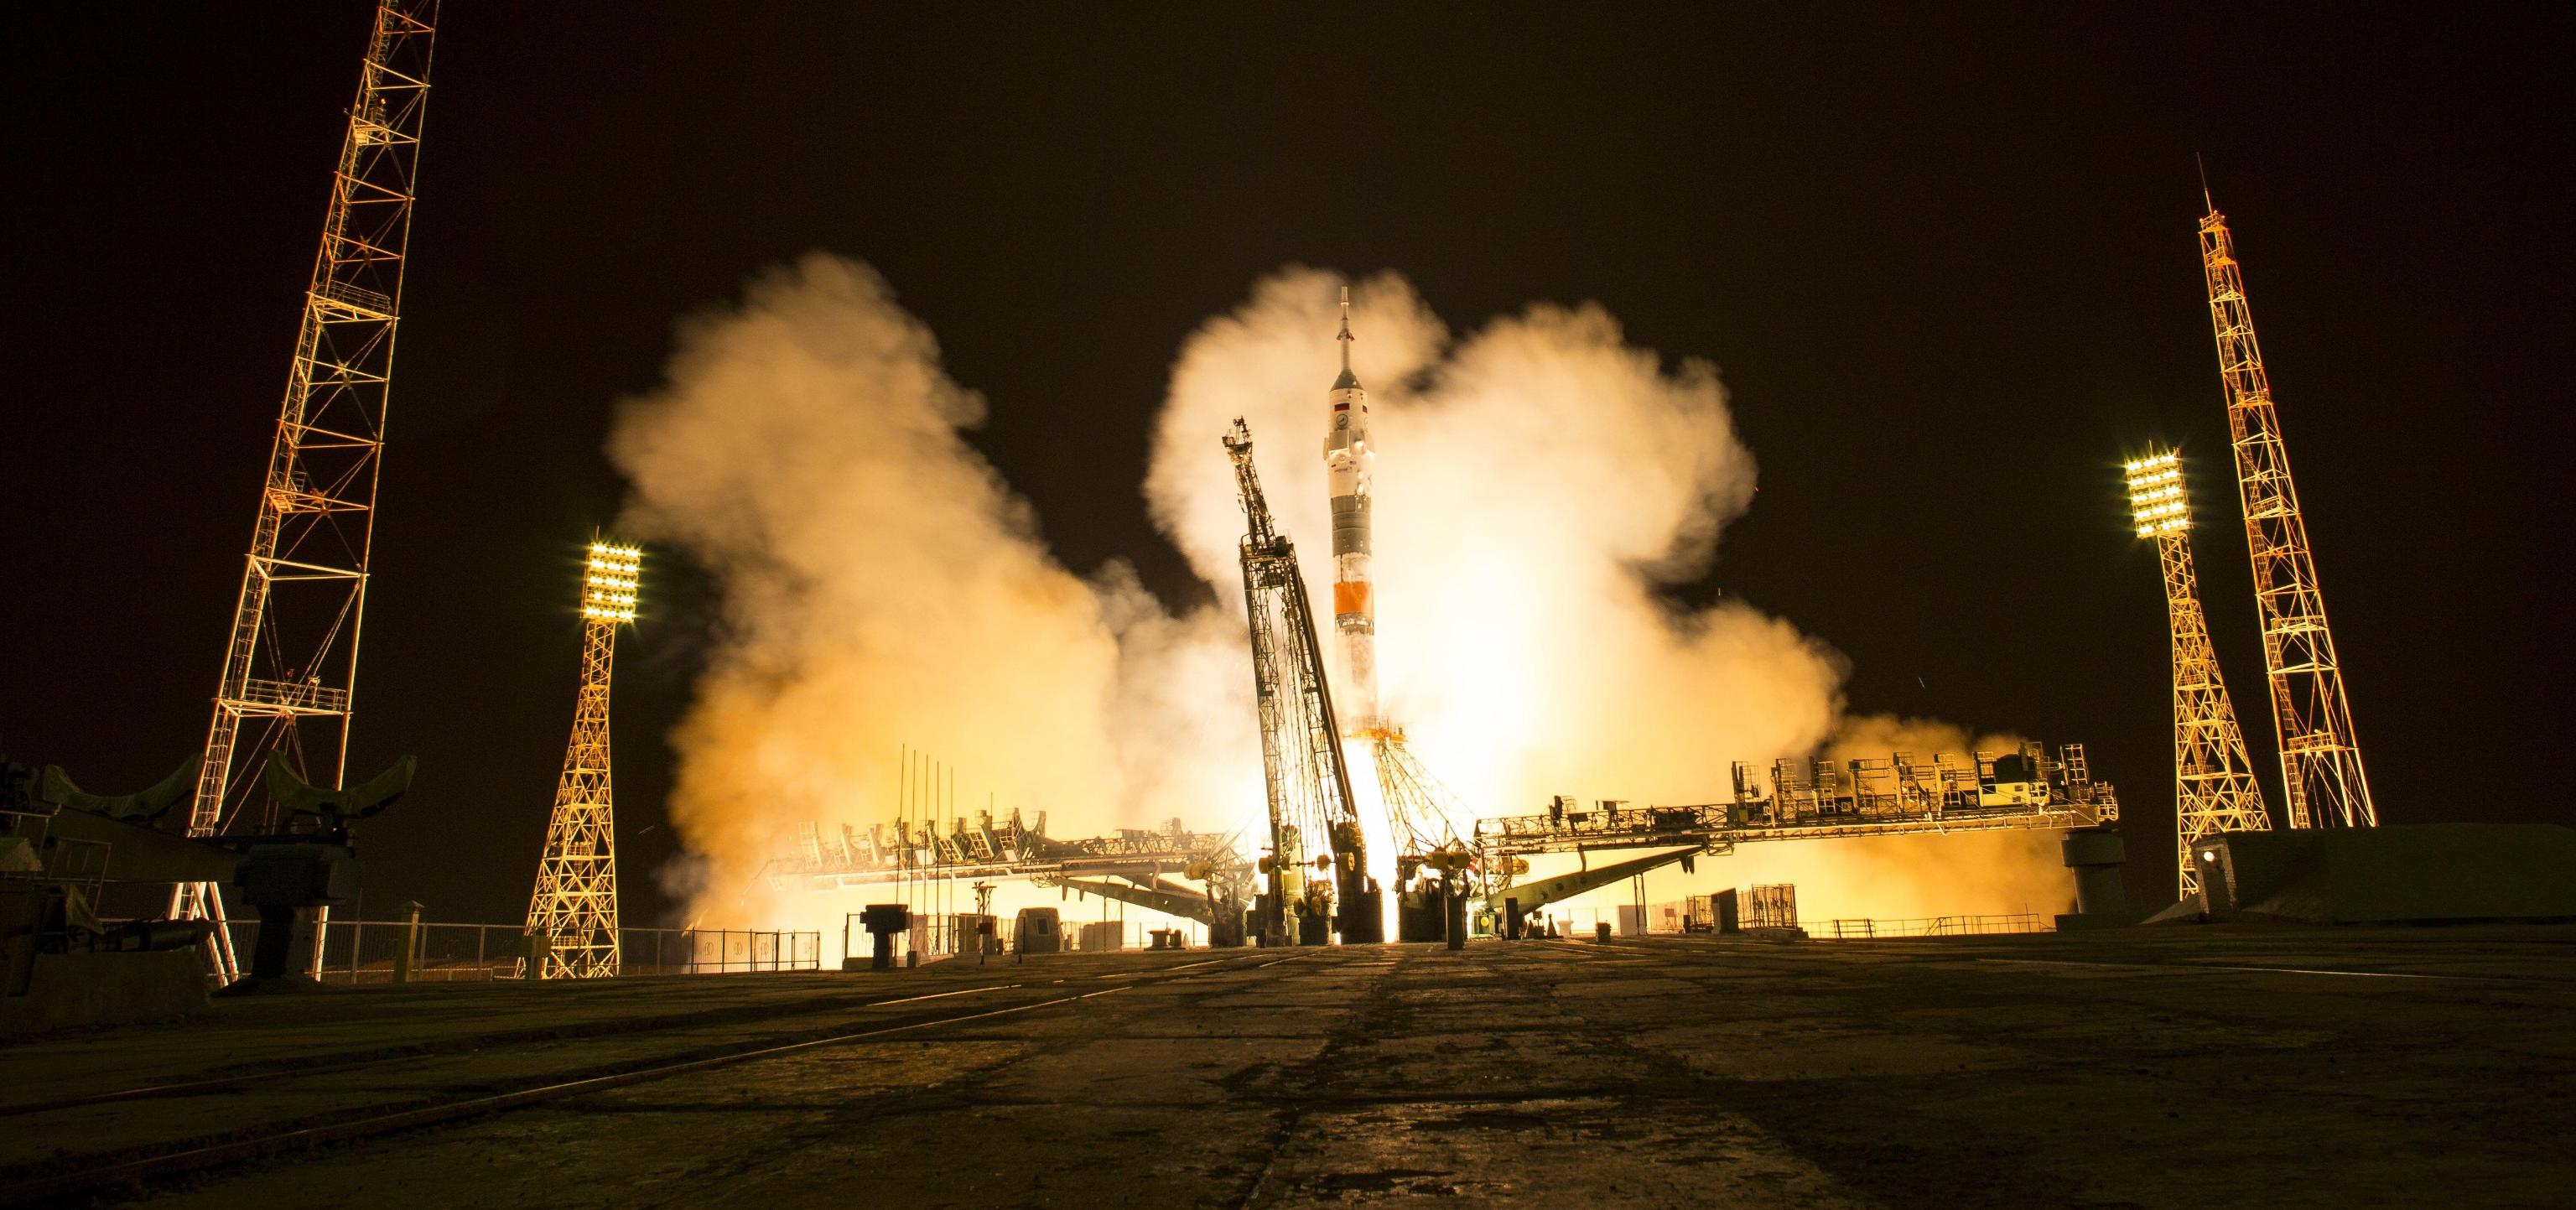 La Soyuz sta per decollare dal cosmodromo di Baikonur, in Kazakistan